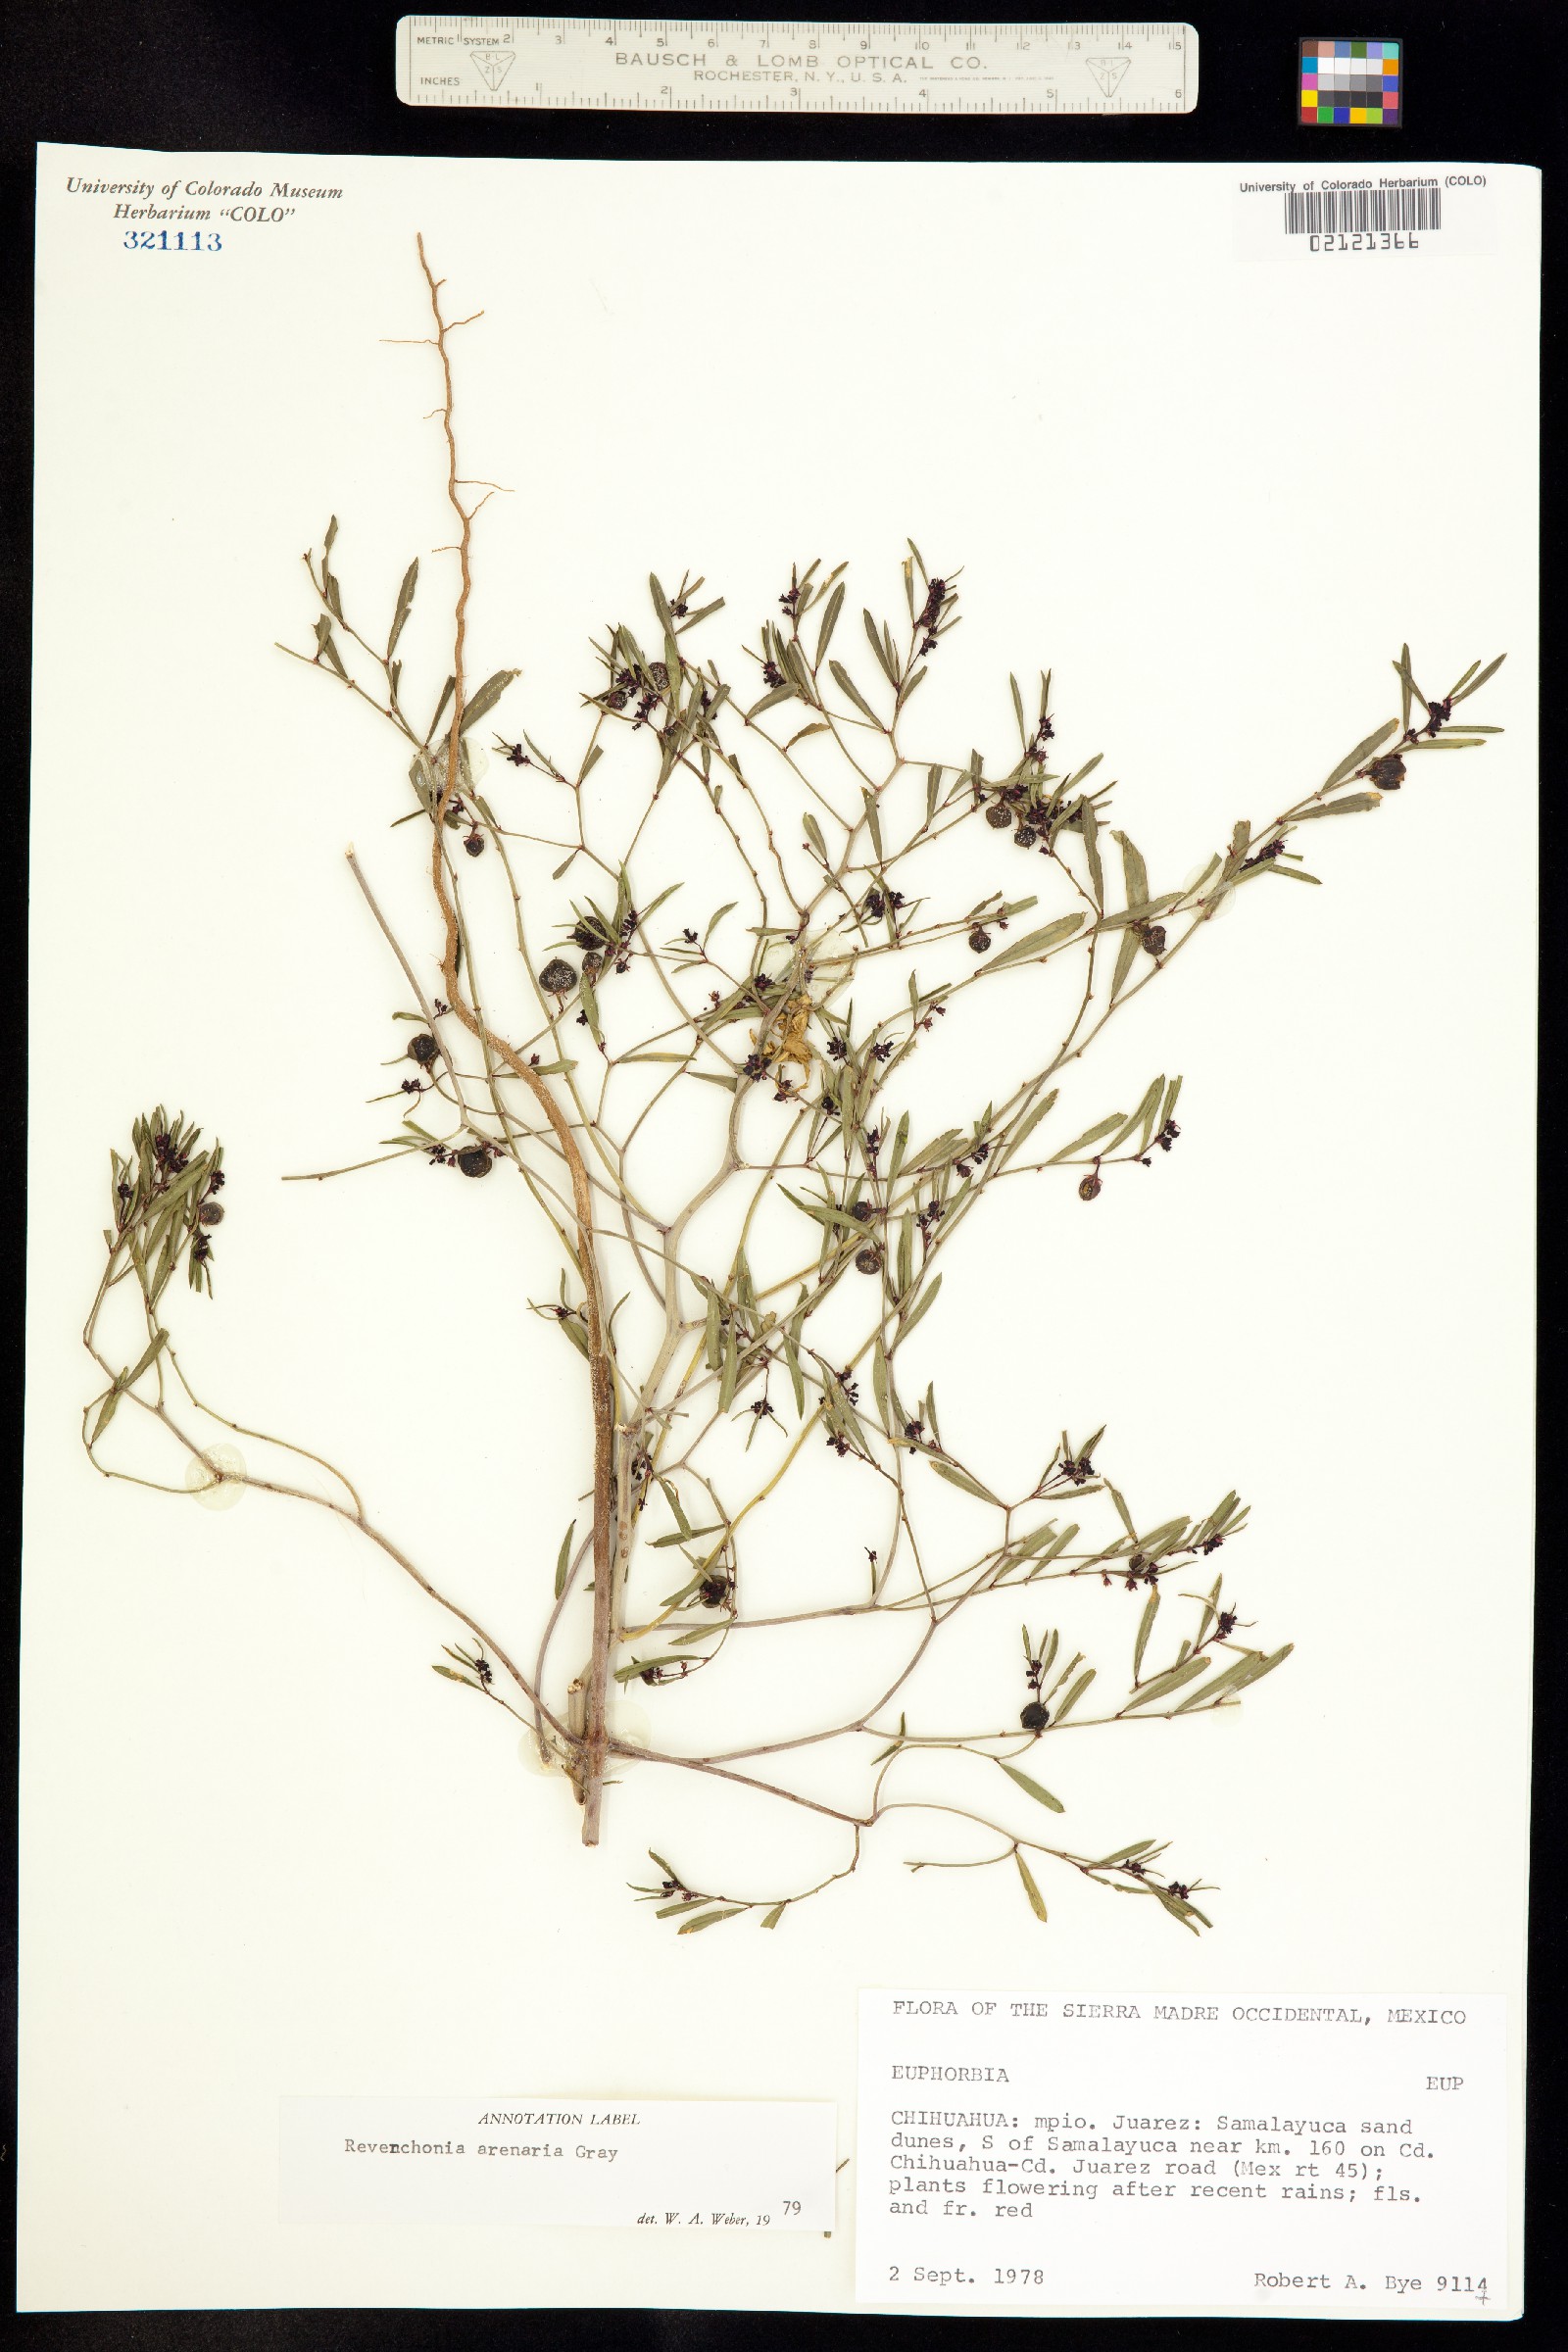 Phyllanthus image